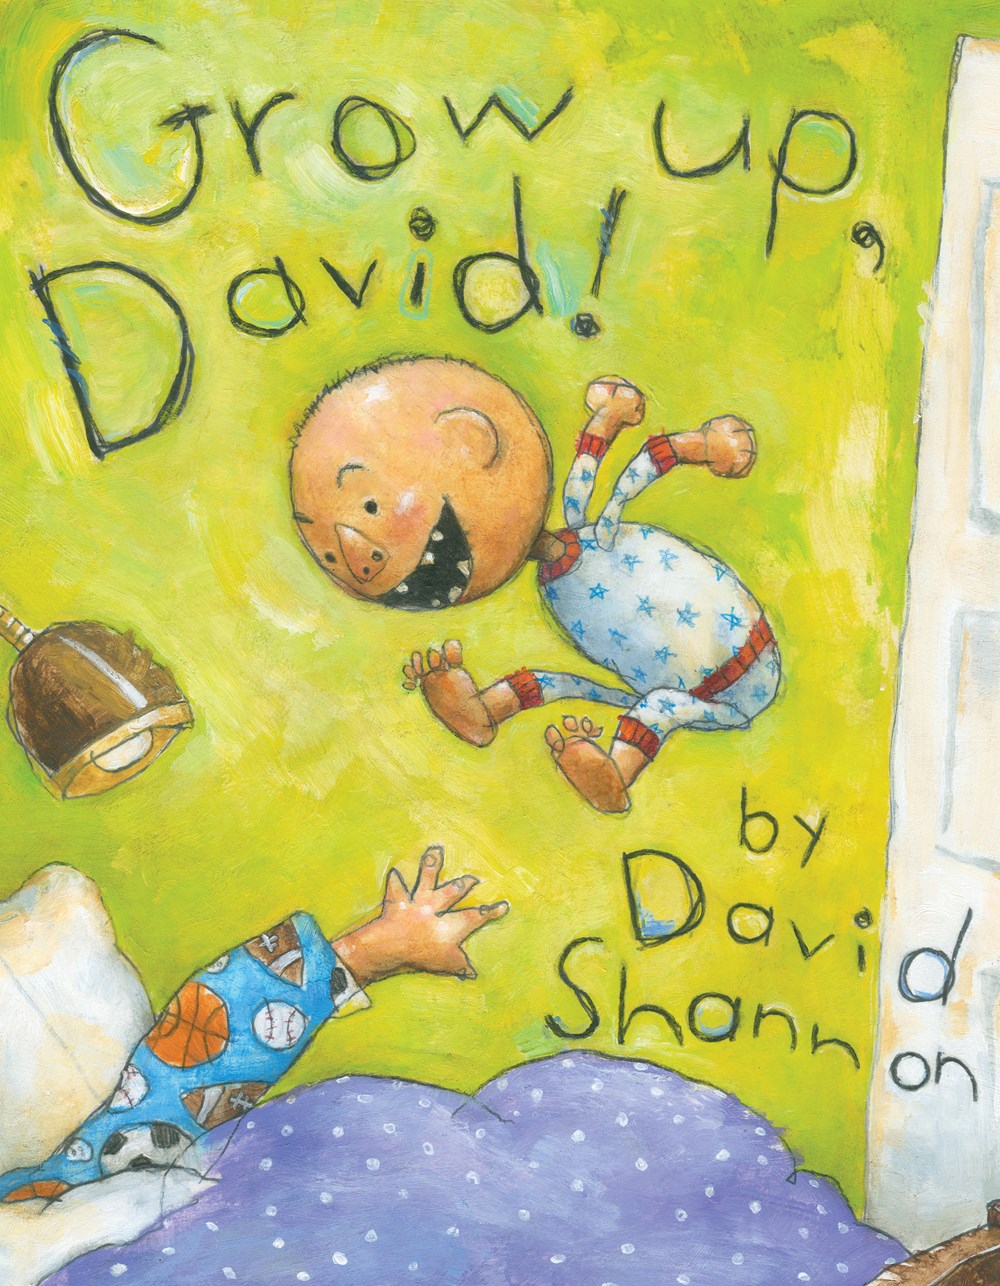 Grow Up, David! By David Shanon